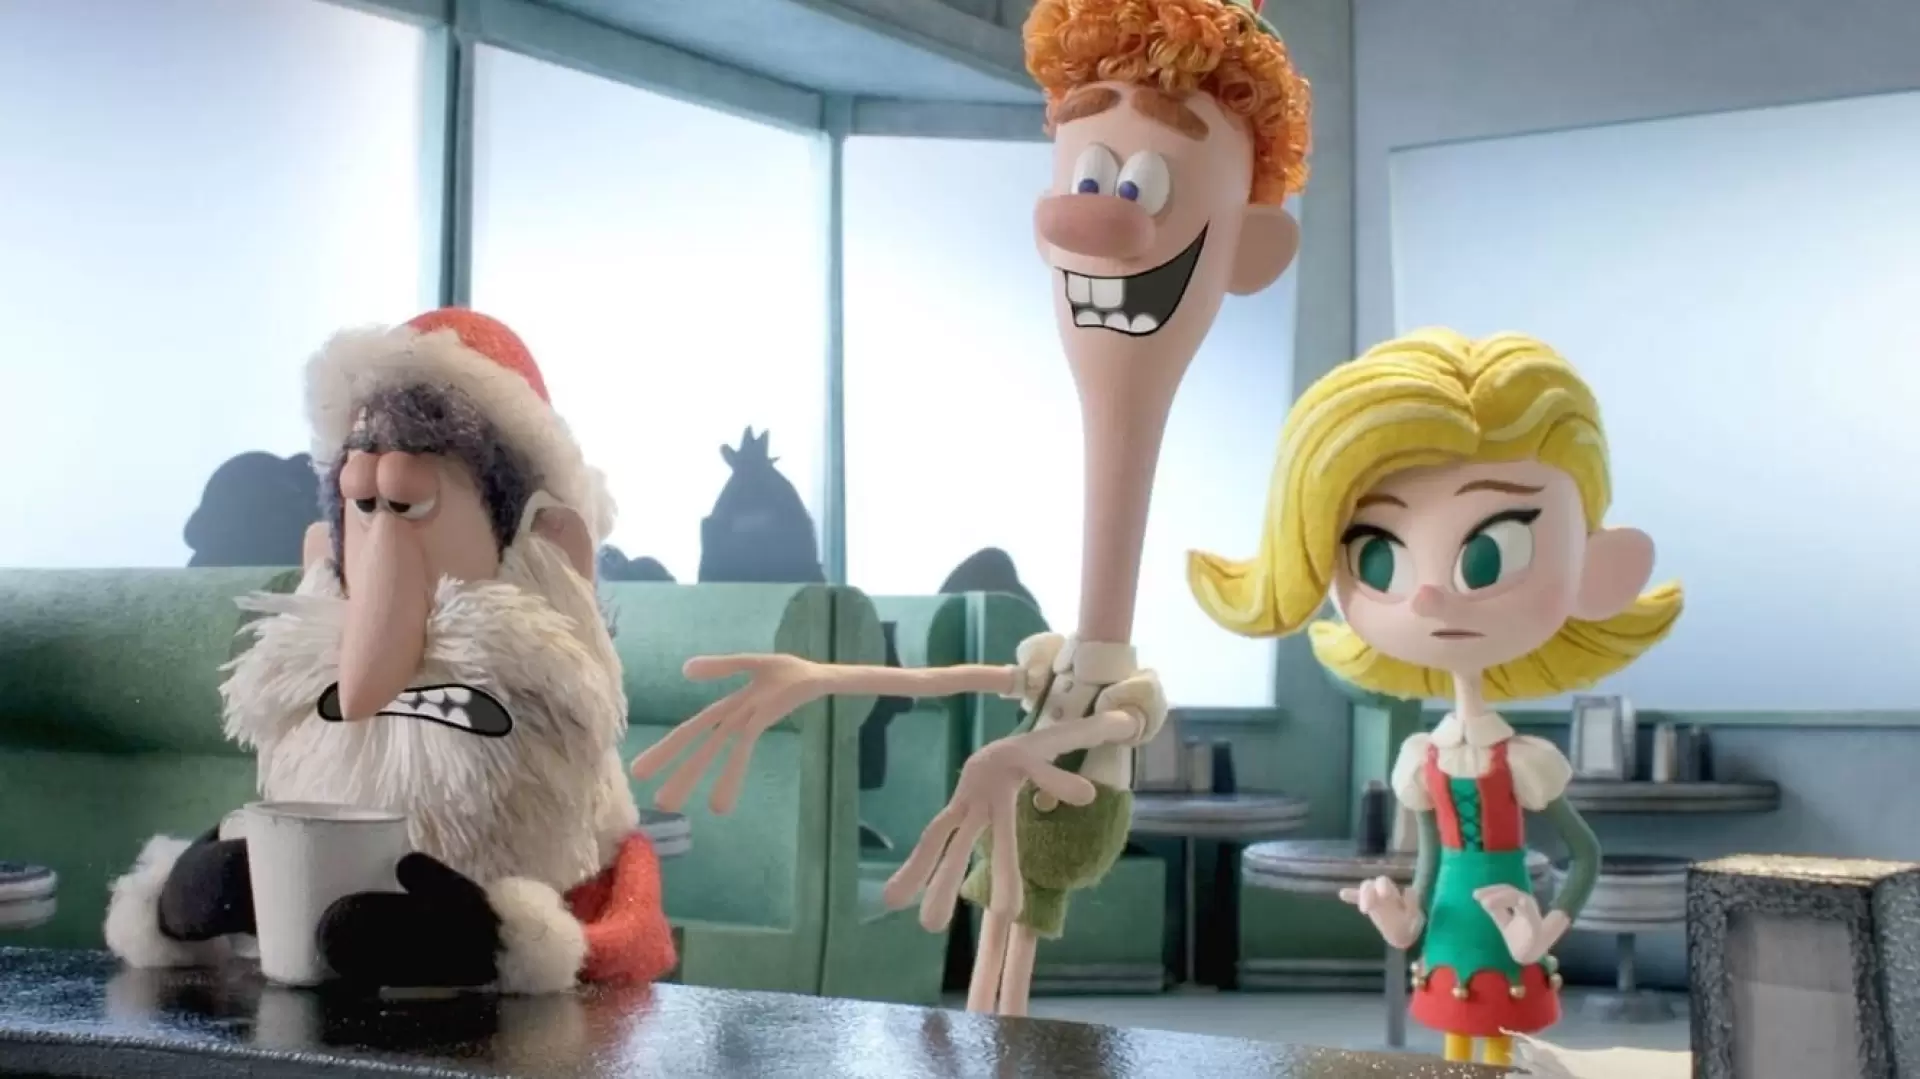 دانلود انیمیشن Elf: Buddy’s Musical Christmas 2014 با زیرنویس فارسی